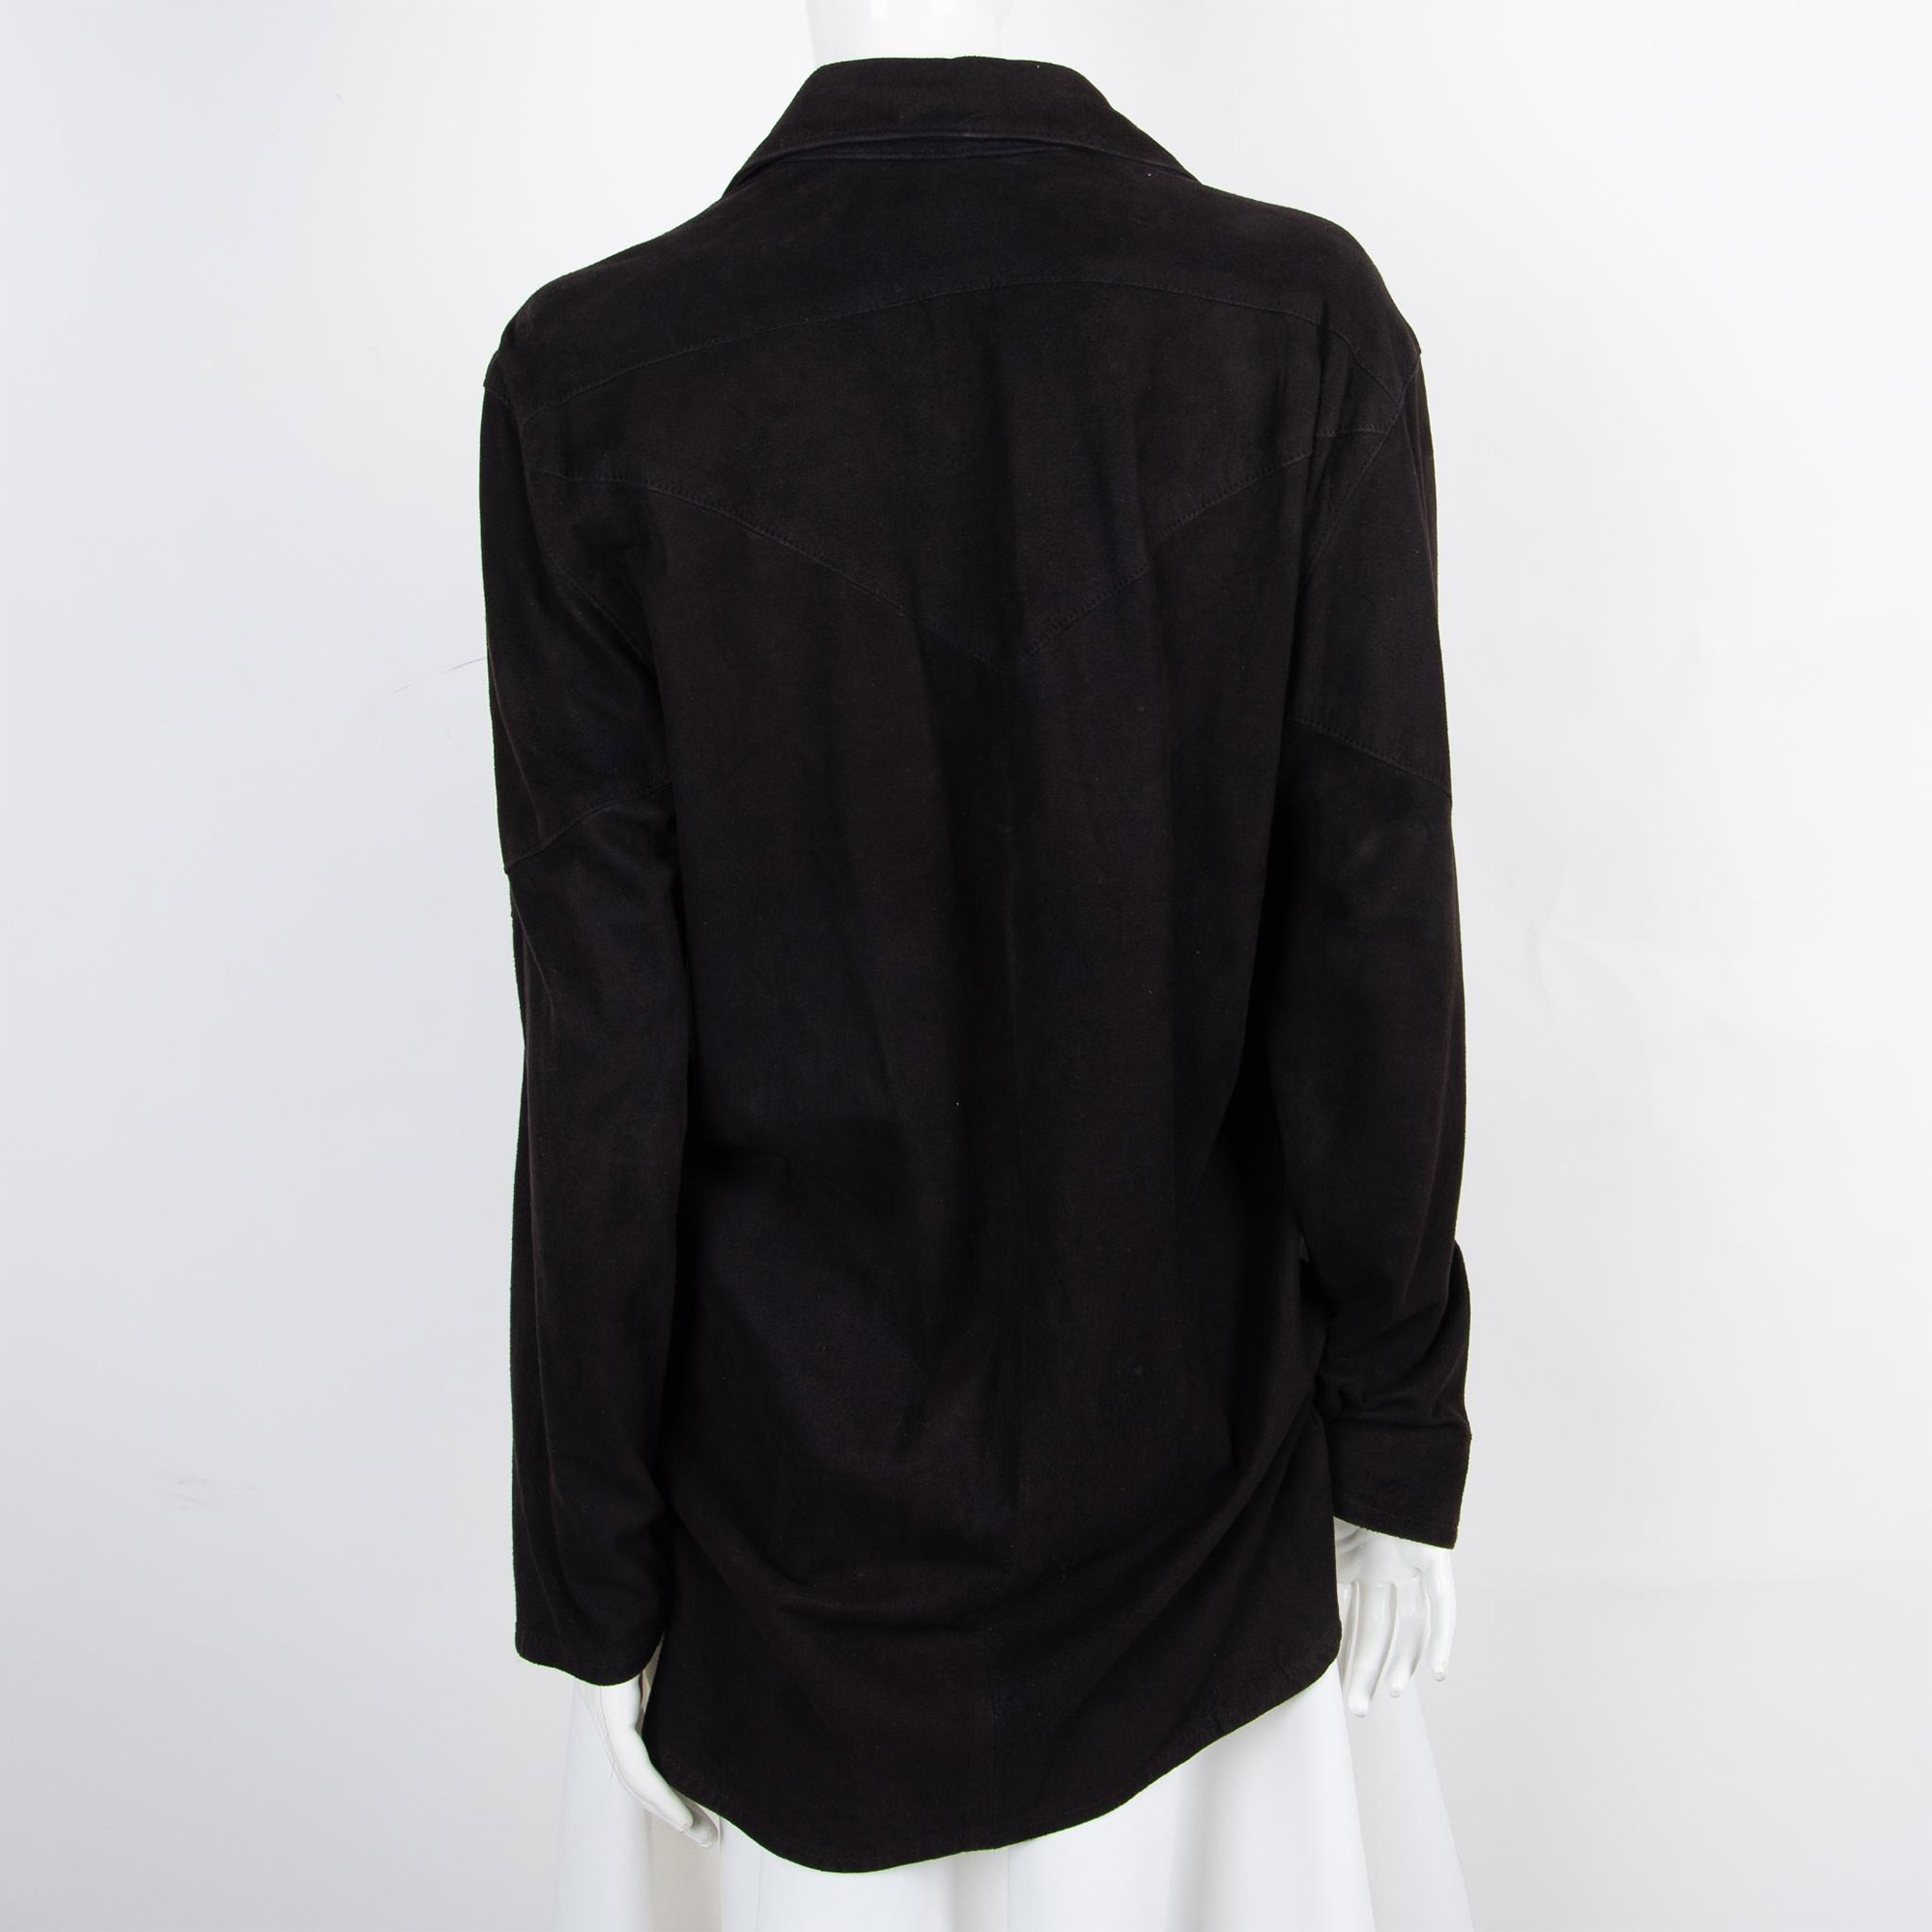 Black Suede Western Shirt, Size Medium - Image 4 of 6